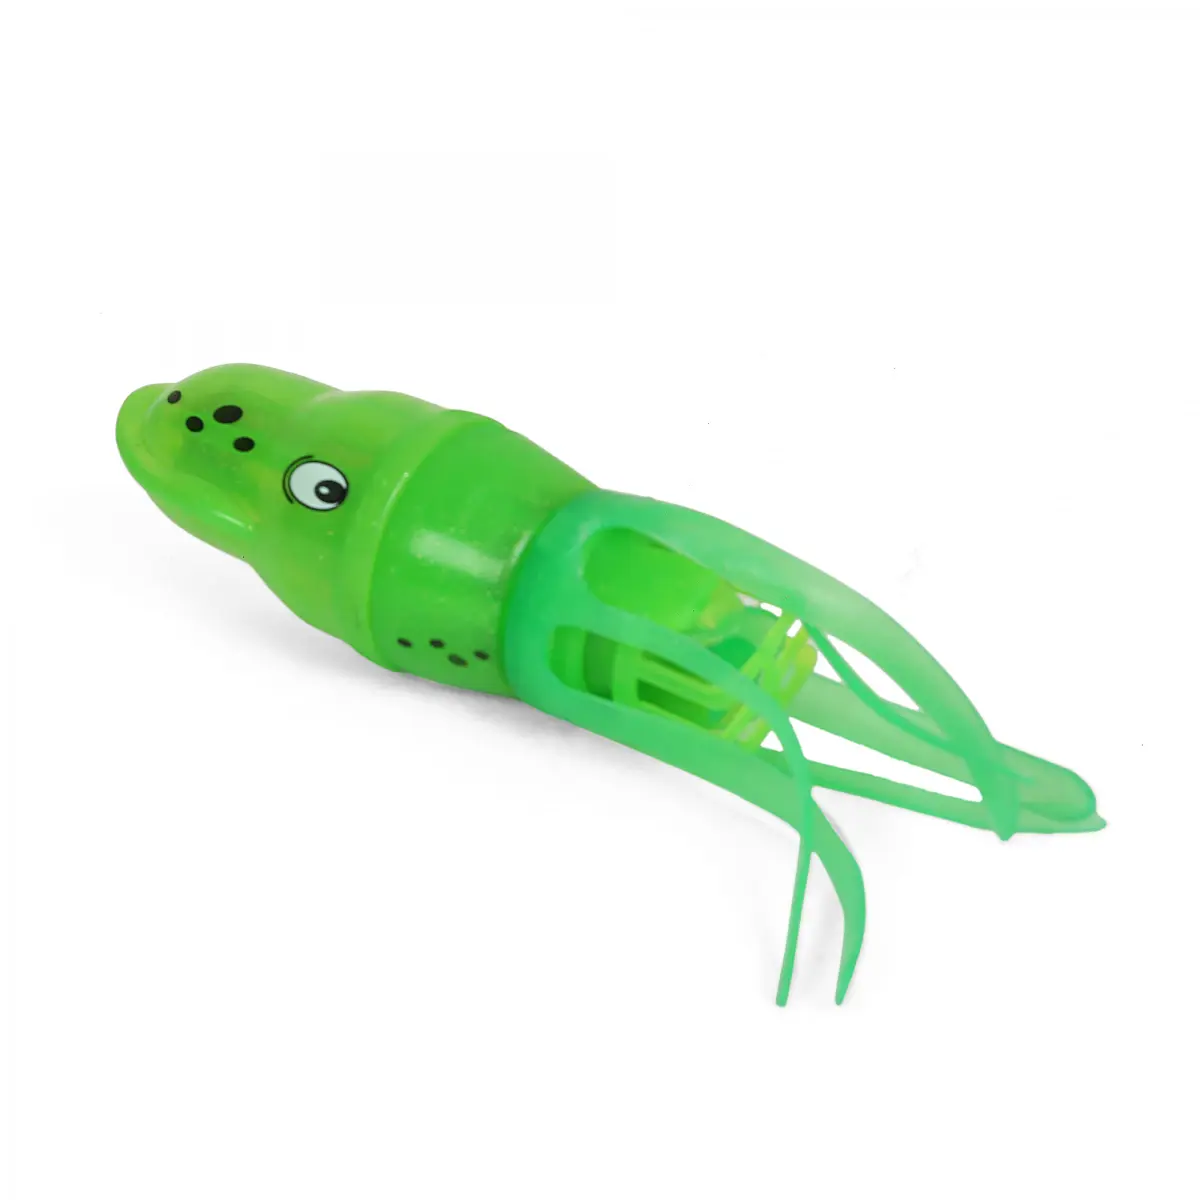 Hamleys Splash Squiddy Fun Water Game, Green, 3Y+